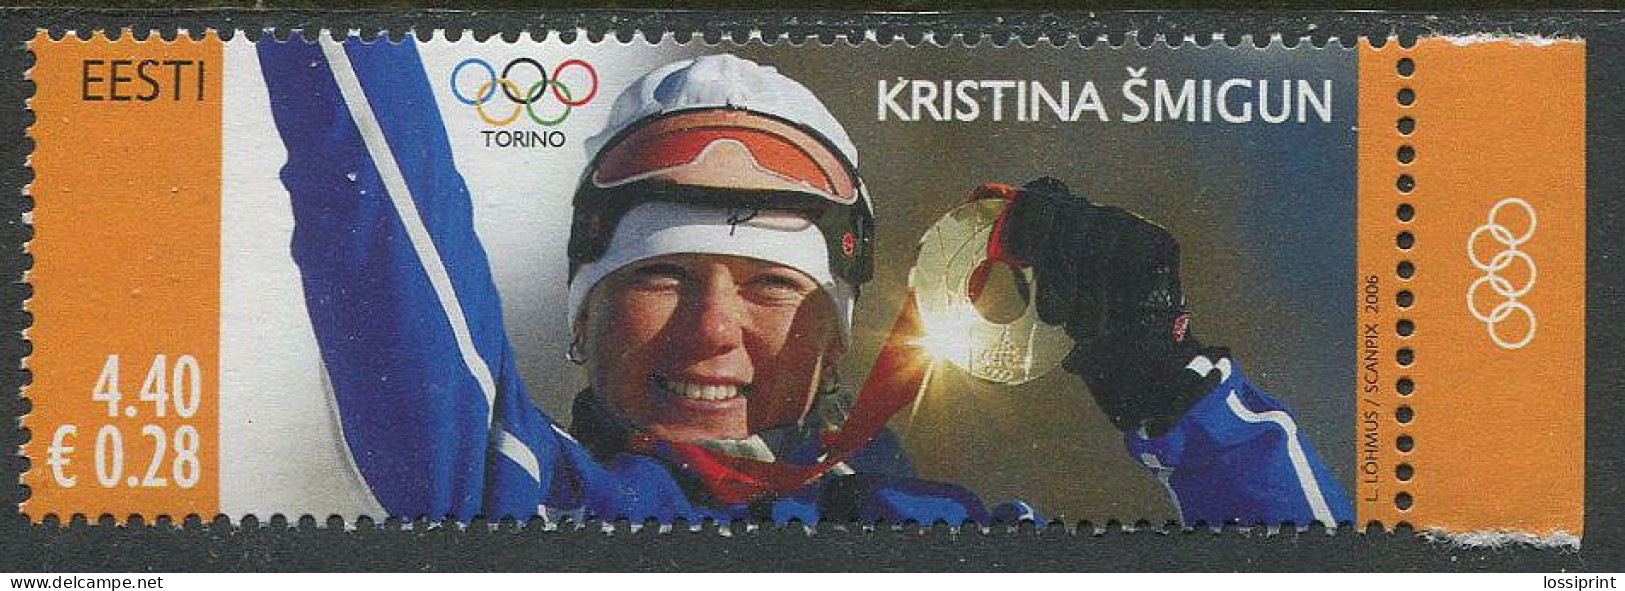 Estonia:Unused Stamp Torino Olympic Games, Olympic Champion Kristiina Šmigun, 2006, MNH - Winter 2006: Torino